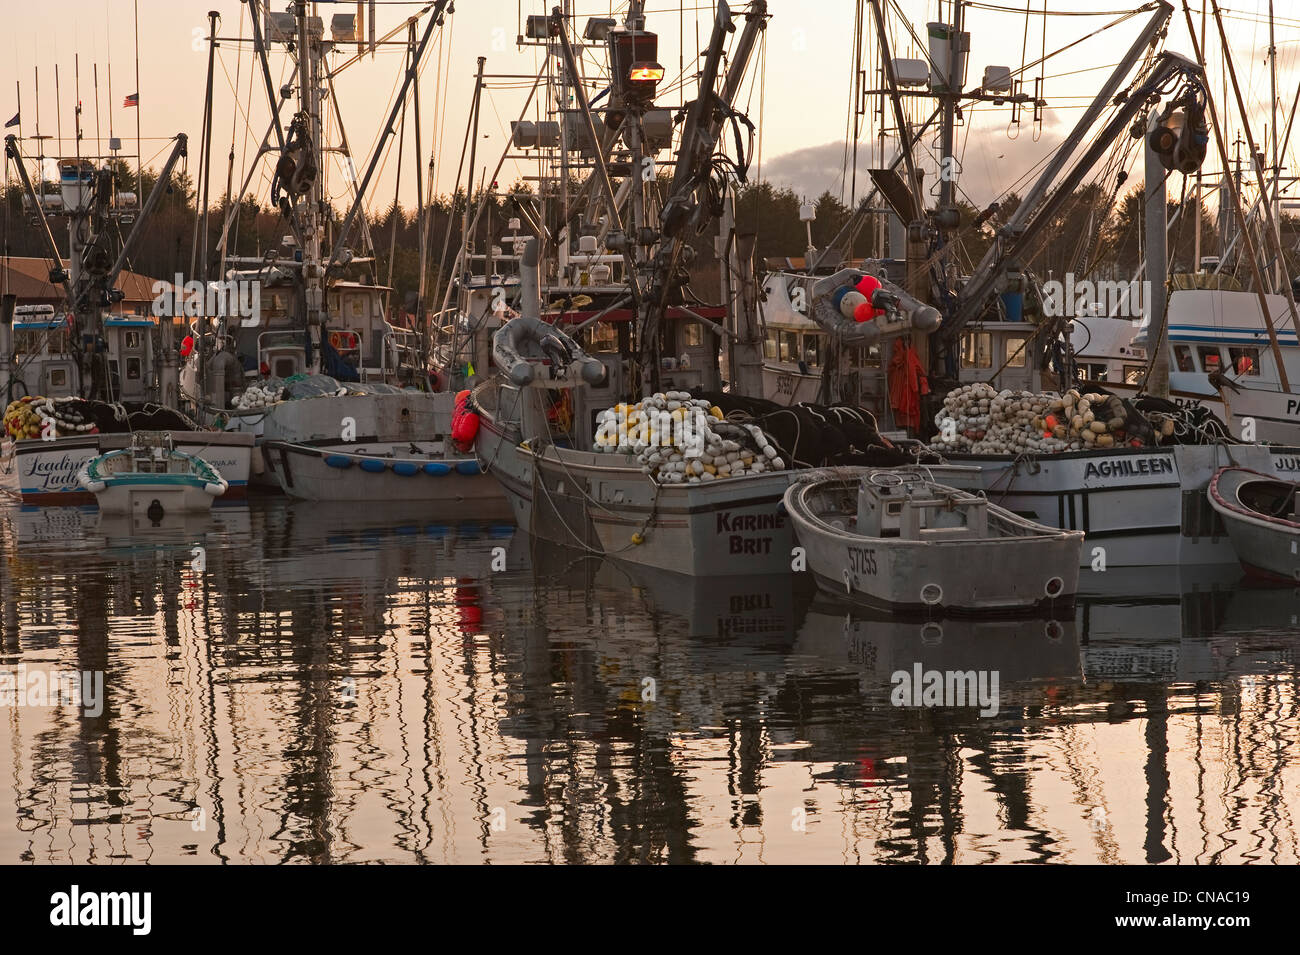 Identifying Alaska Commercial Fishing Boats - Information About Alaska